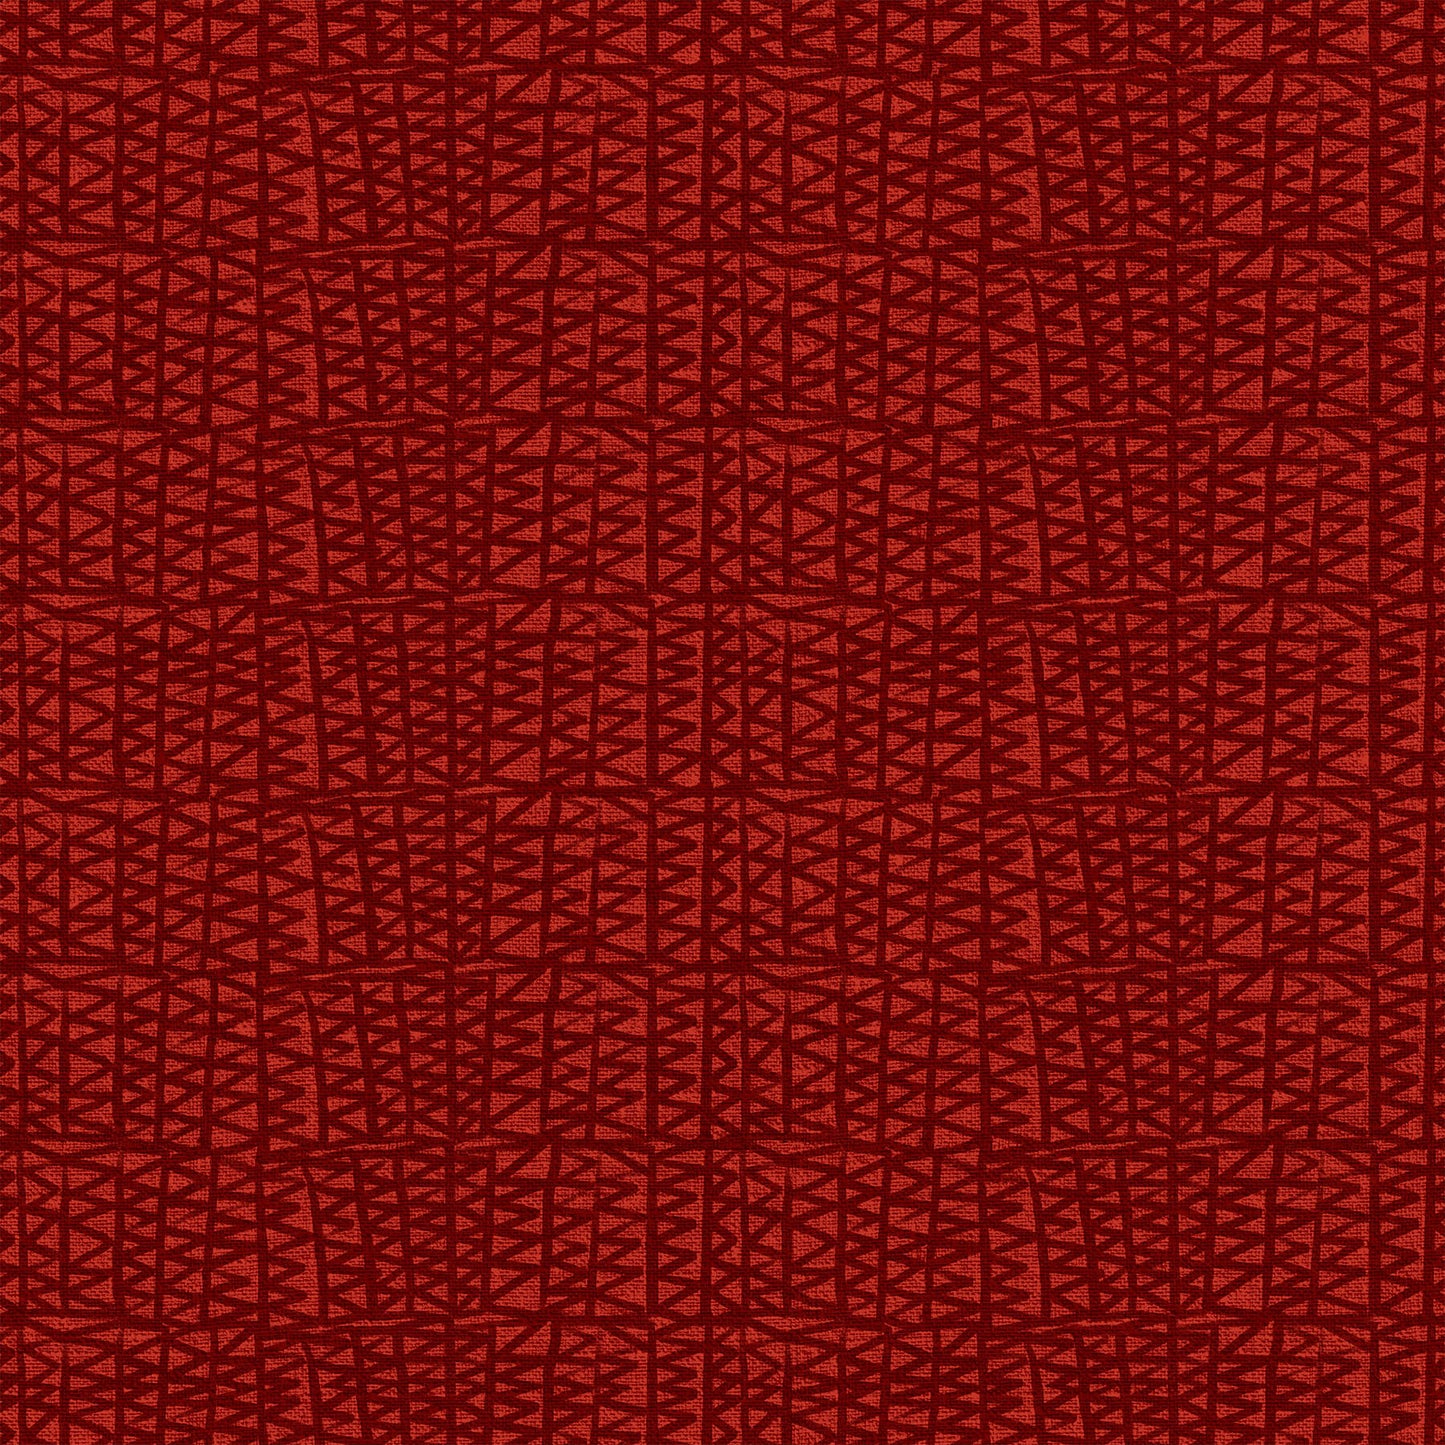 Zigzags on Red - Workshop by Libs Elliott